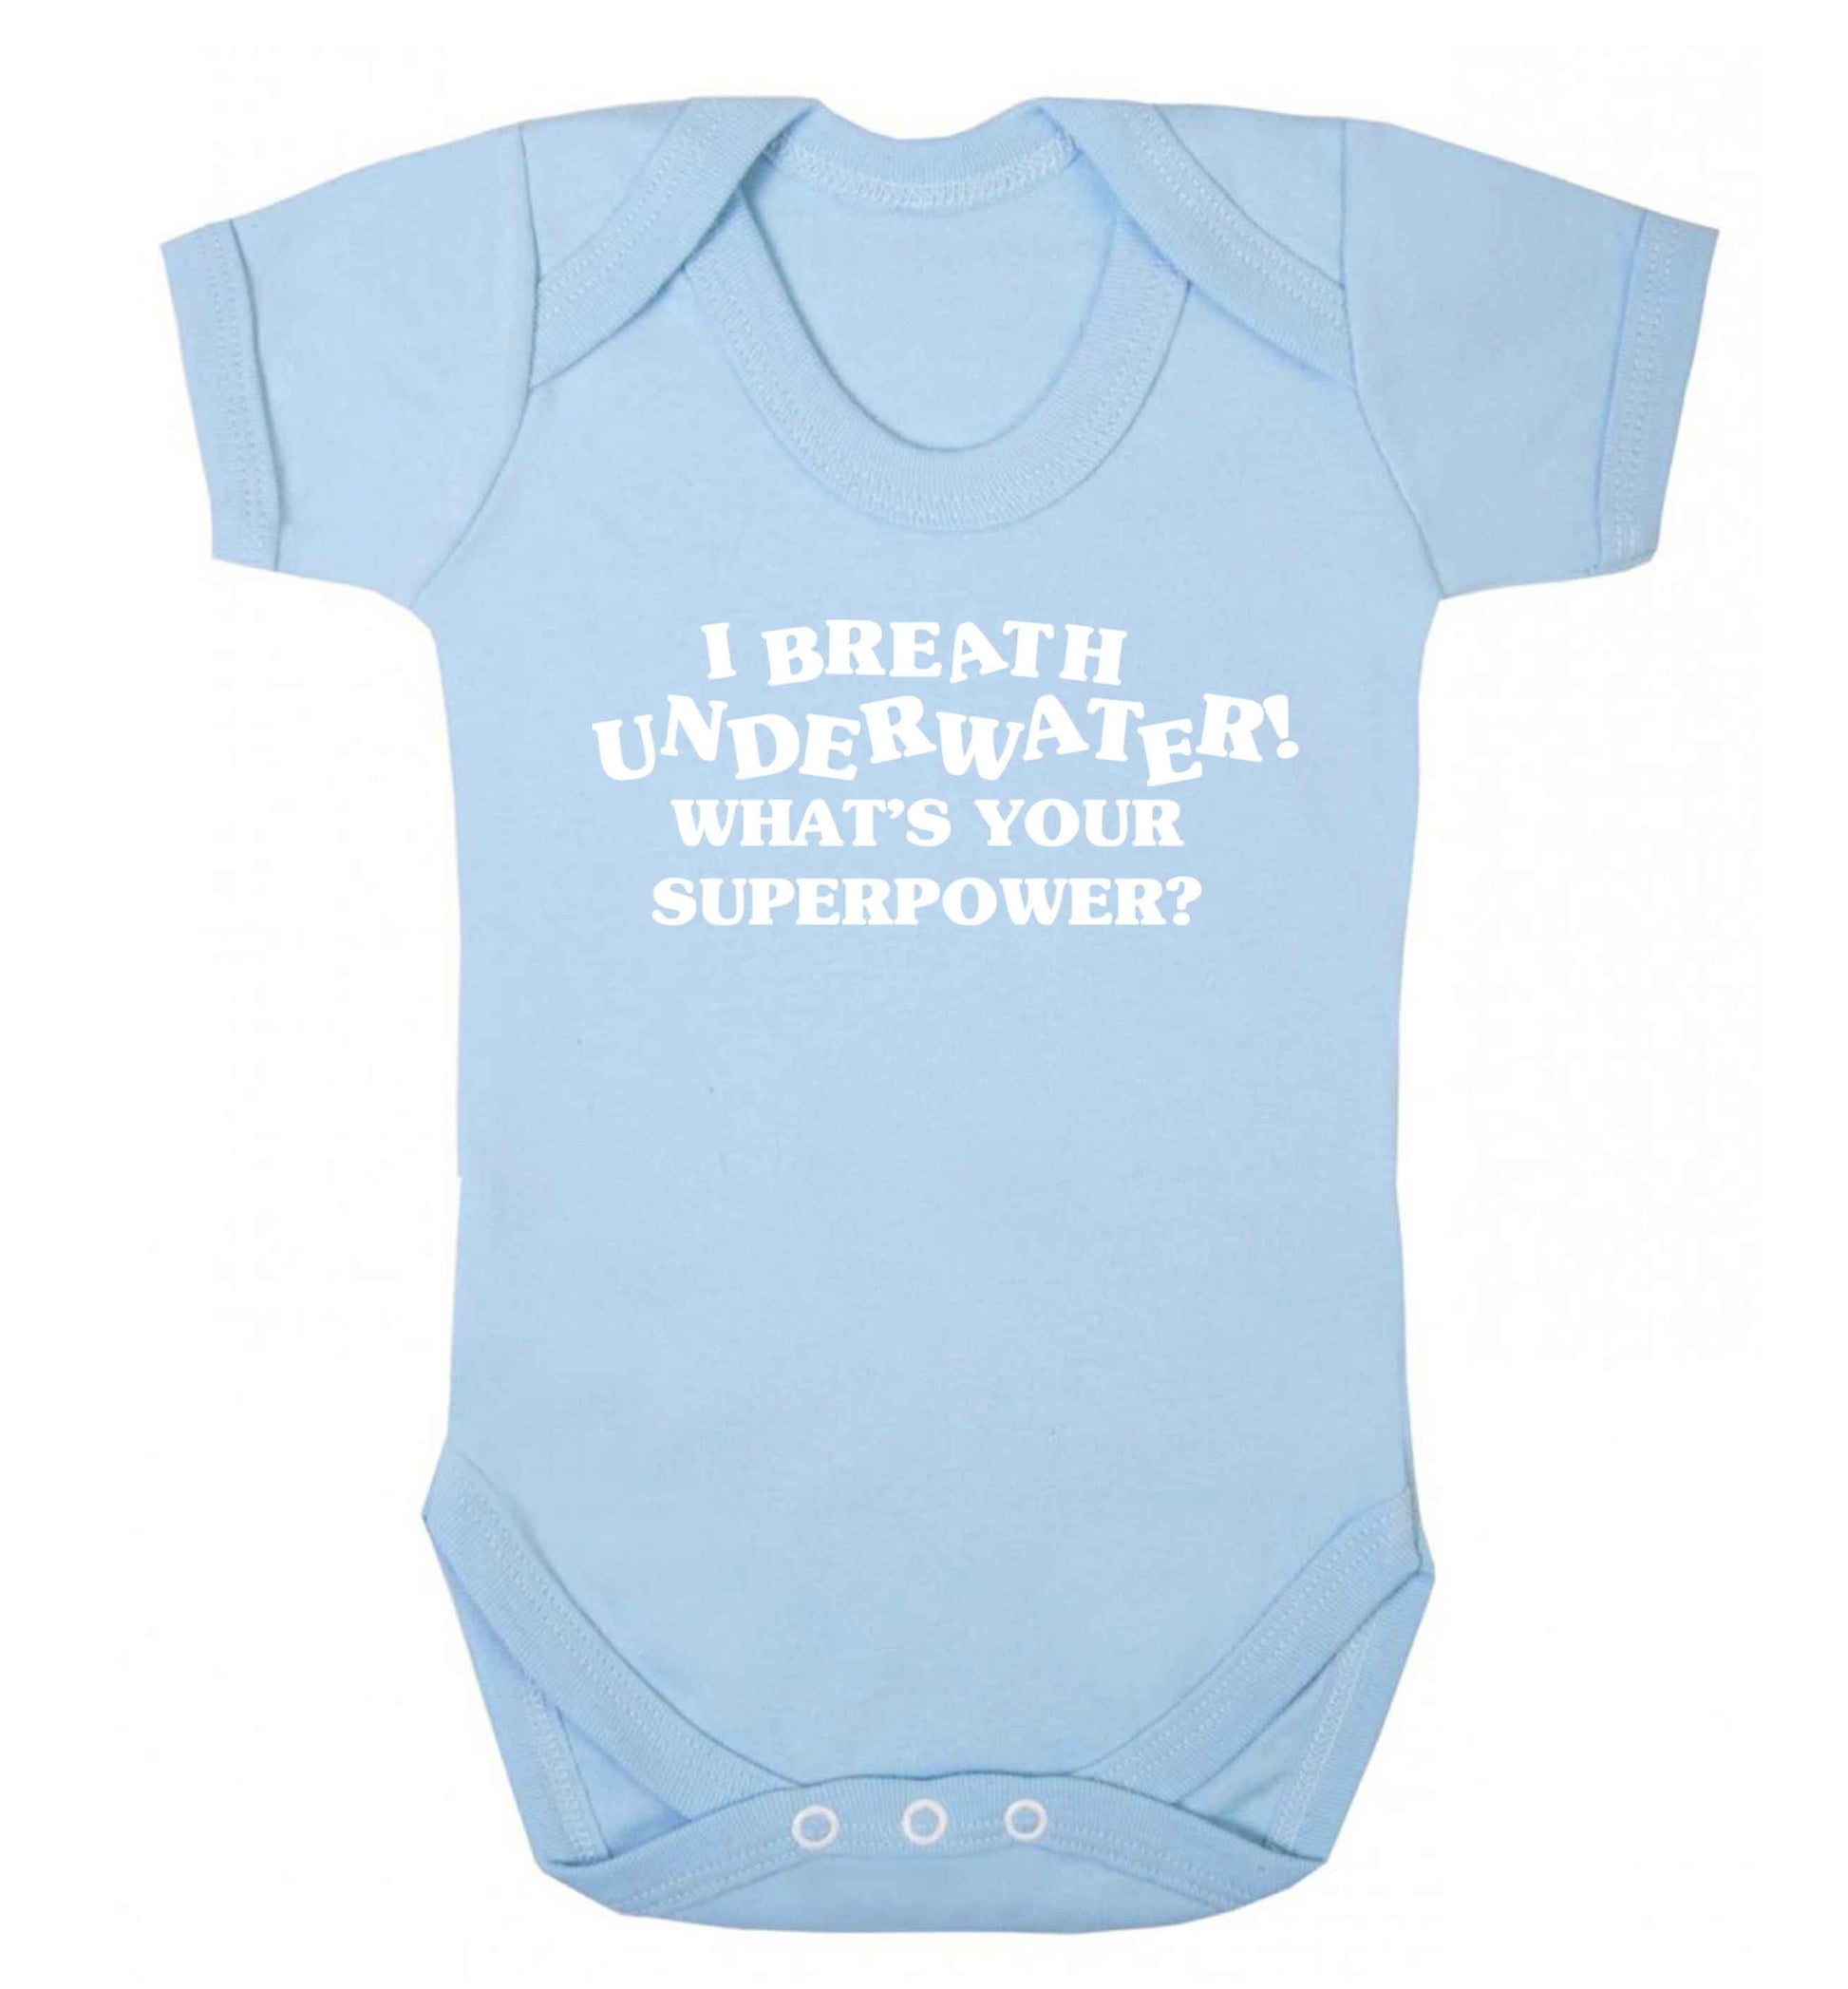 I breath underwater what's your superpower? Baby Vest pale blue 18-24 months